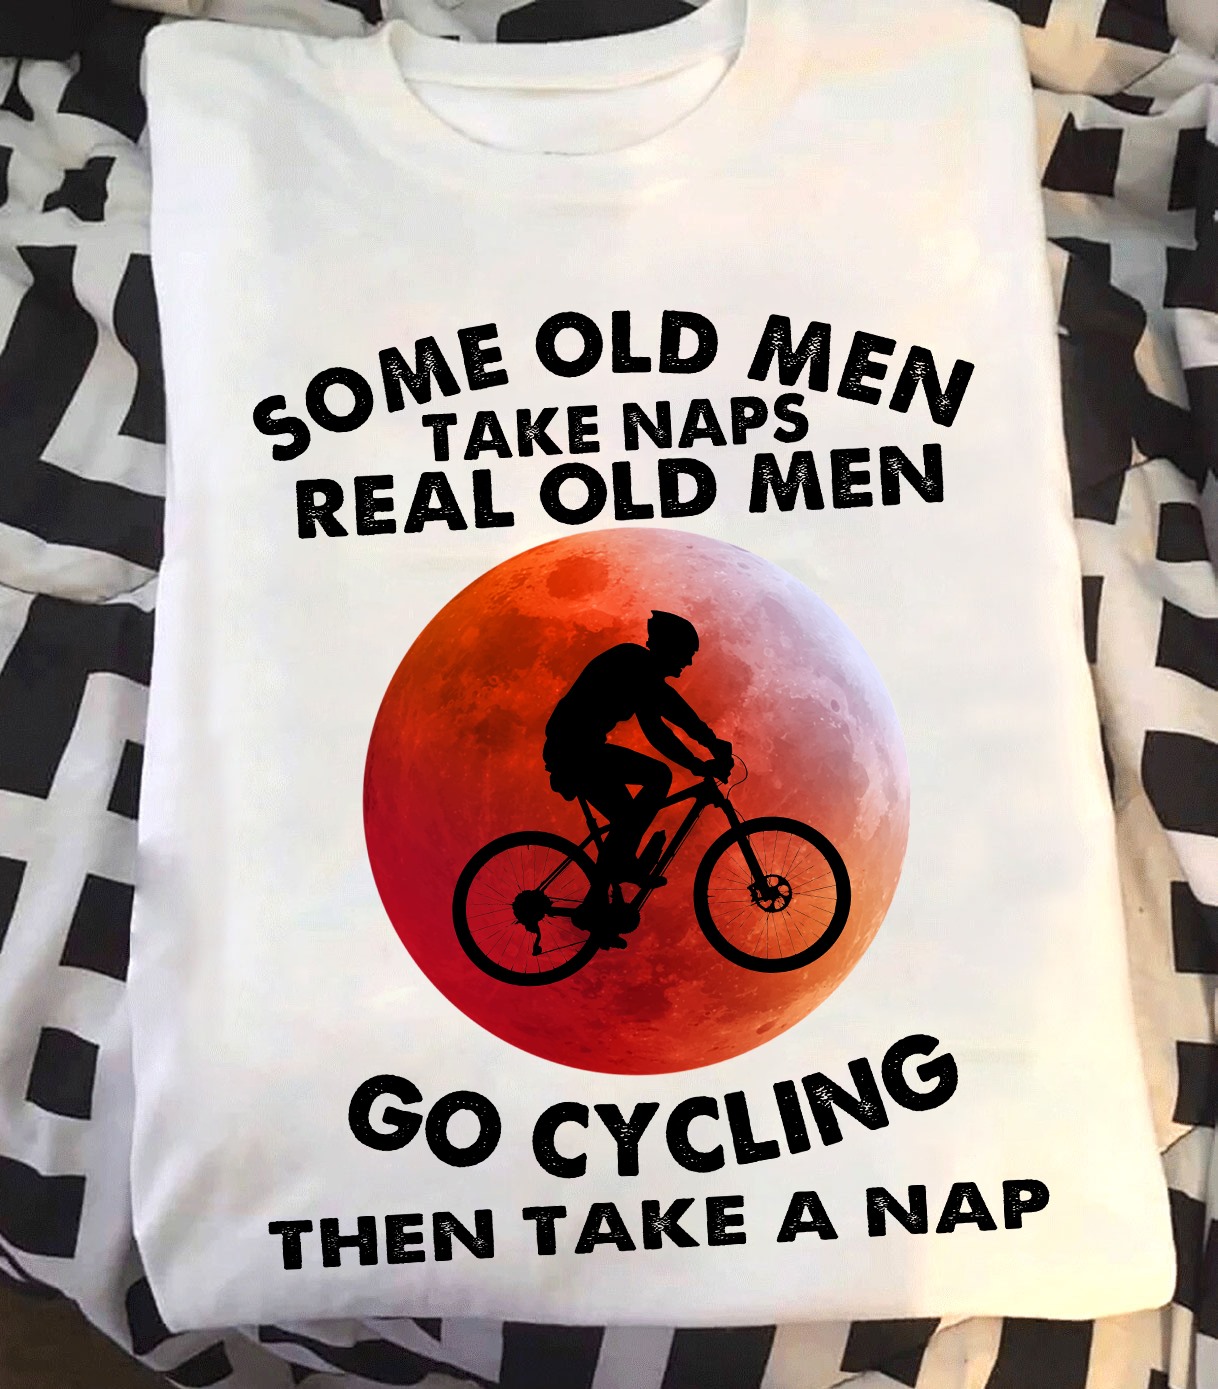 Some old men take naps real old men go cycling then take a nap